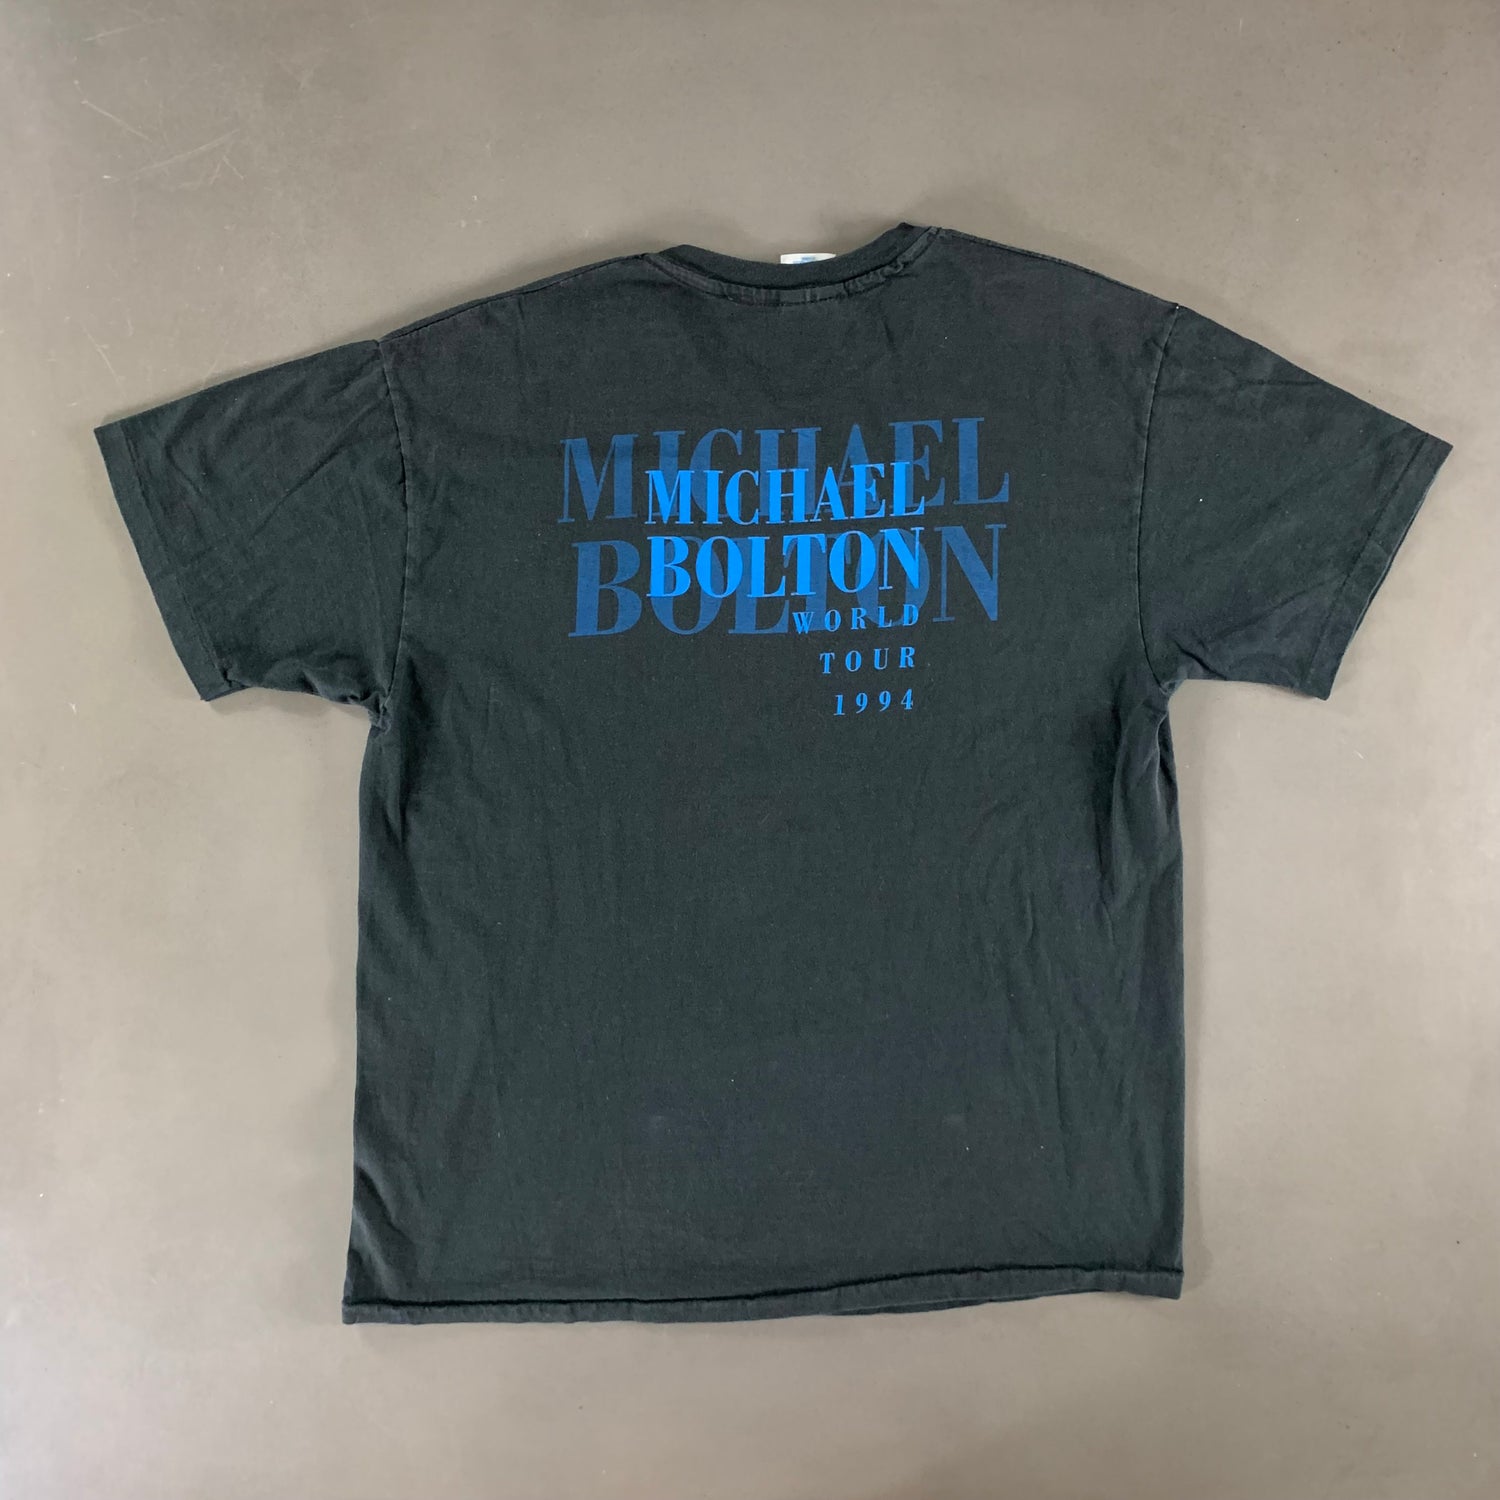 Vintage 1994 Michael Bolton T-shirt size XL